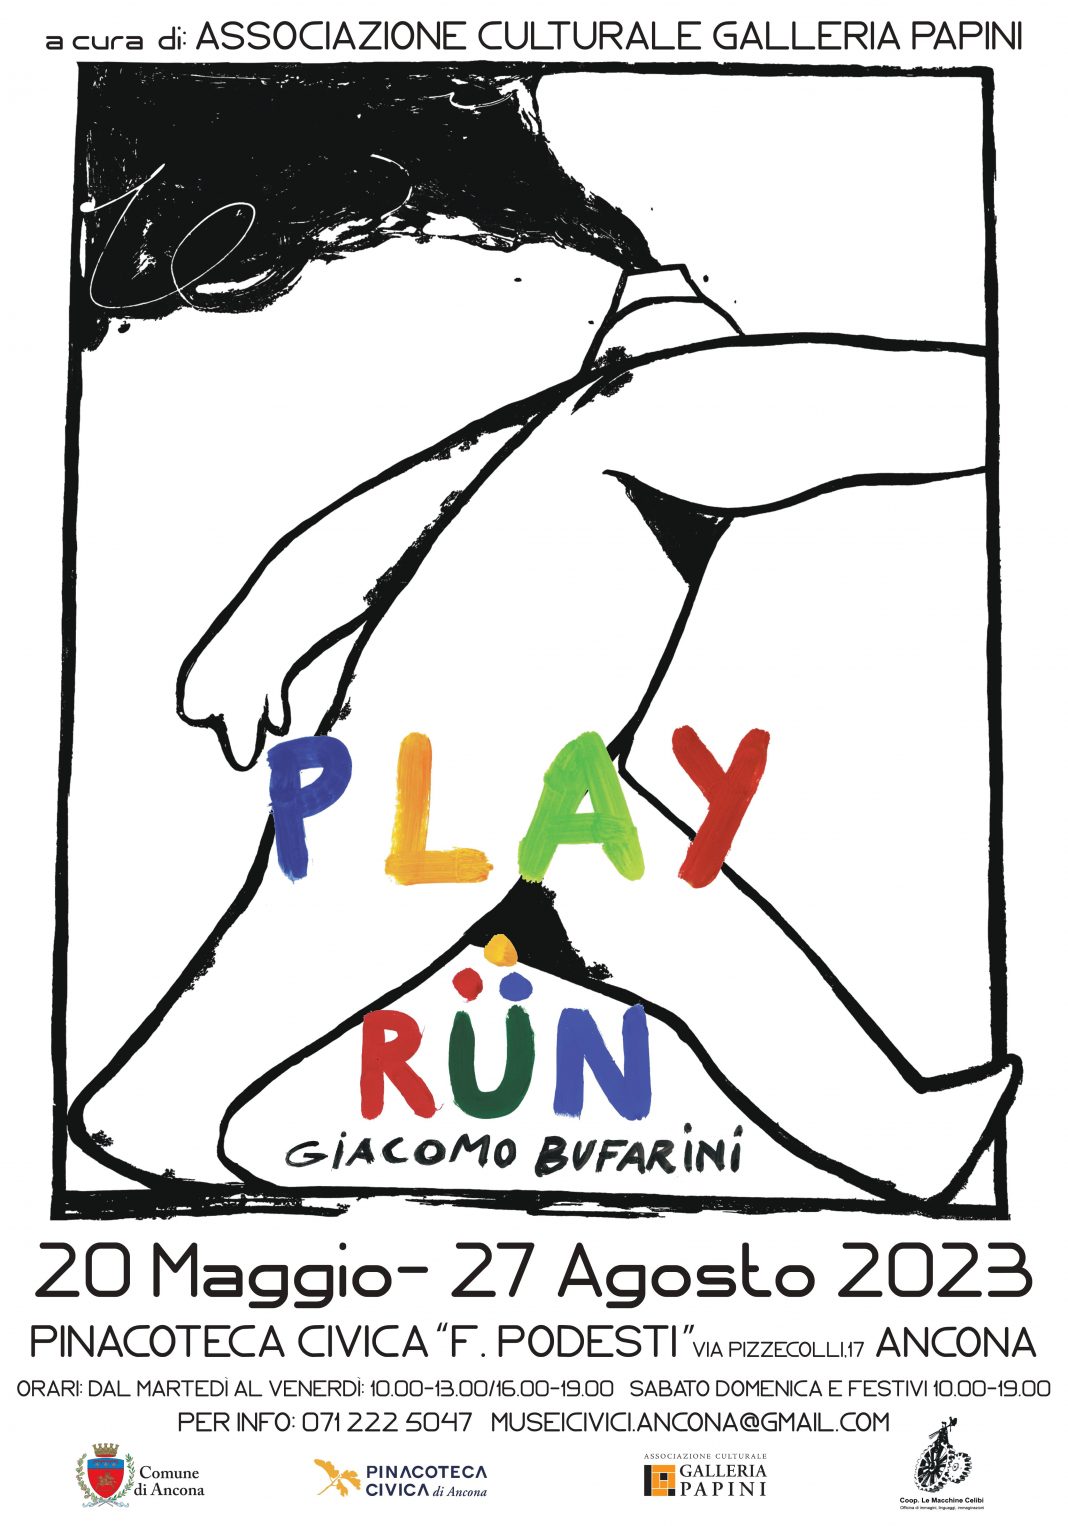 Run Giacomo Bufarini – Playhttps://www.exibart.com/repository/media/formidable/11/img/e7a/manifesto--1068x1526.jpg